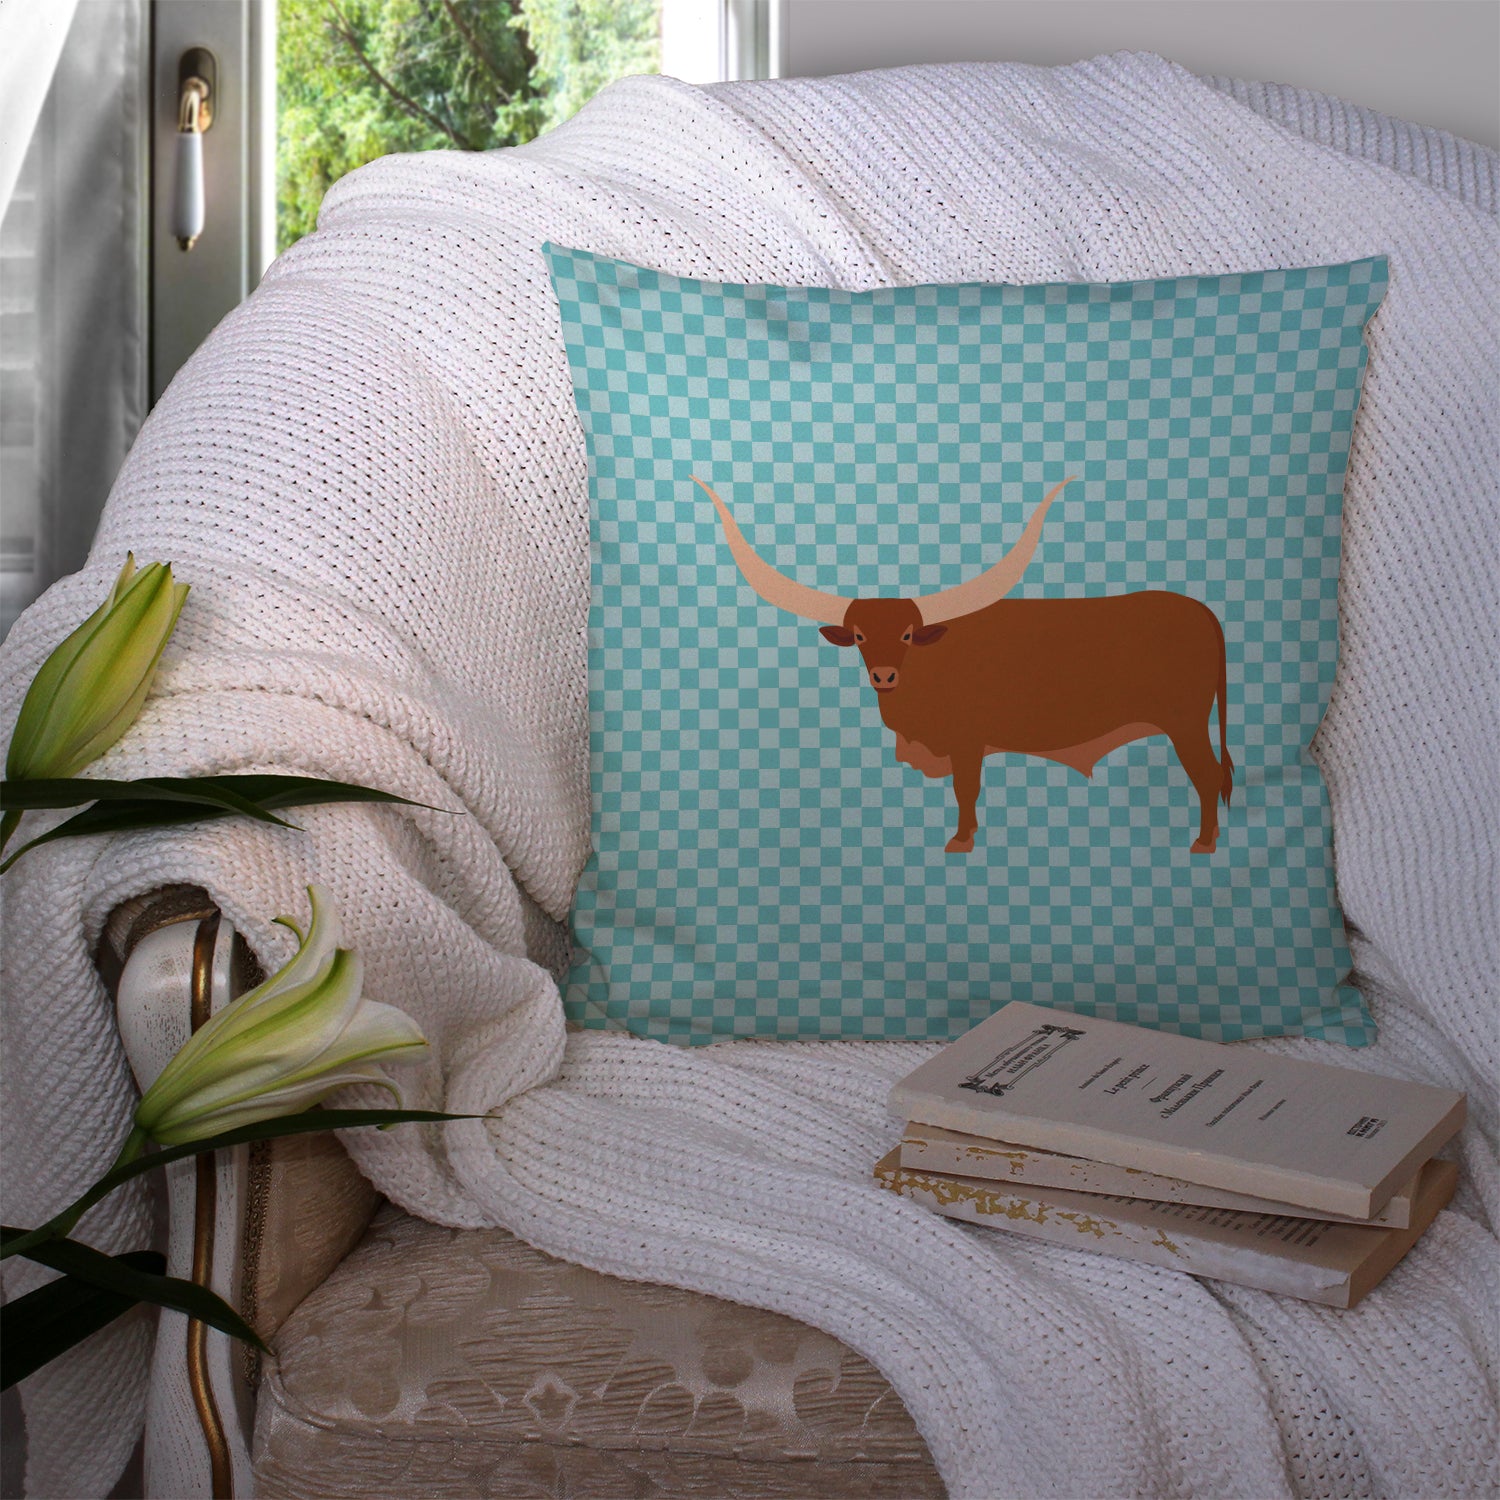 Ankole-Watusu Cow Blue Check Fabric Decorative Pillow BB7997PW1414 - the-store.com